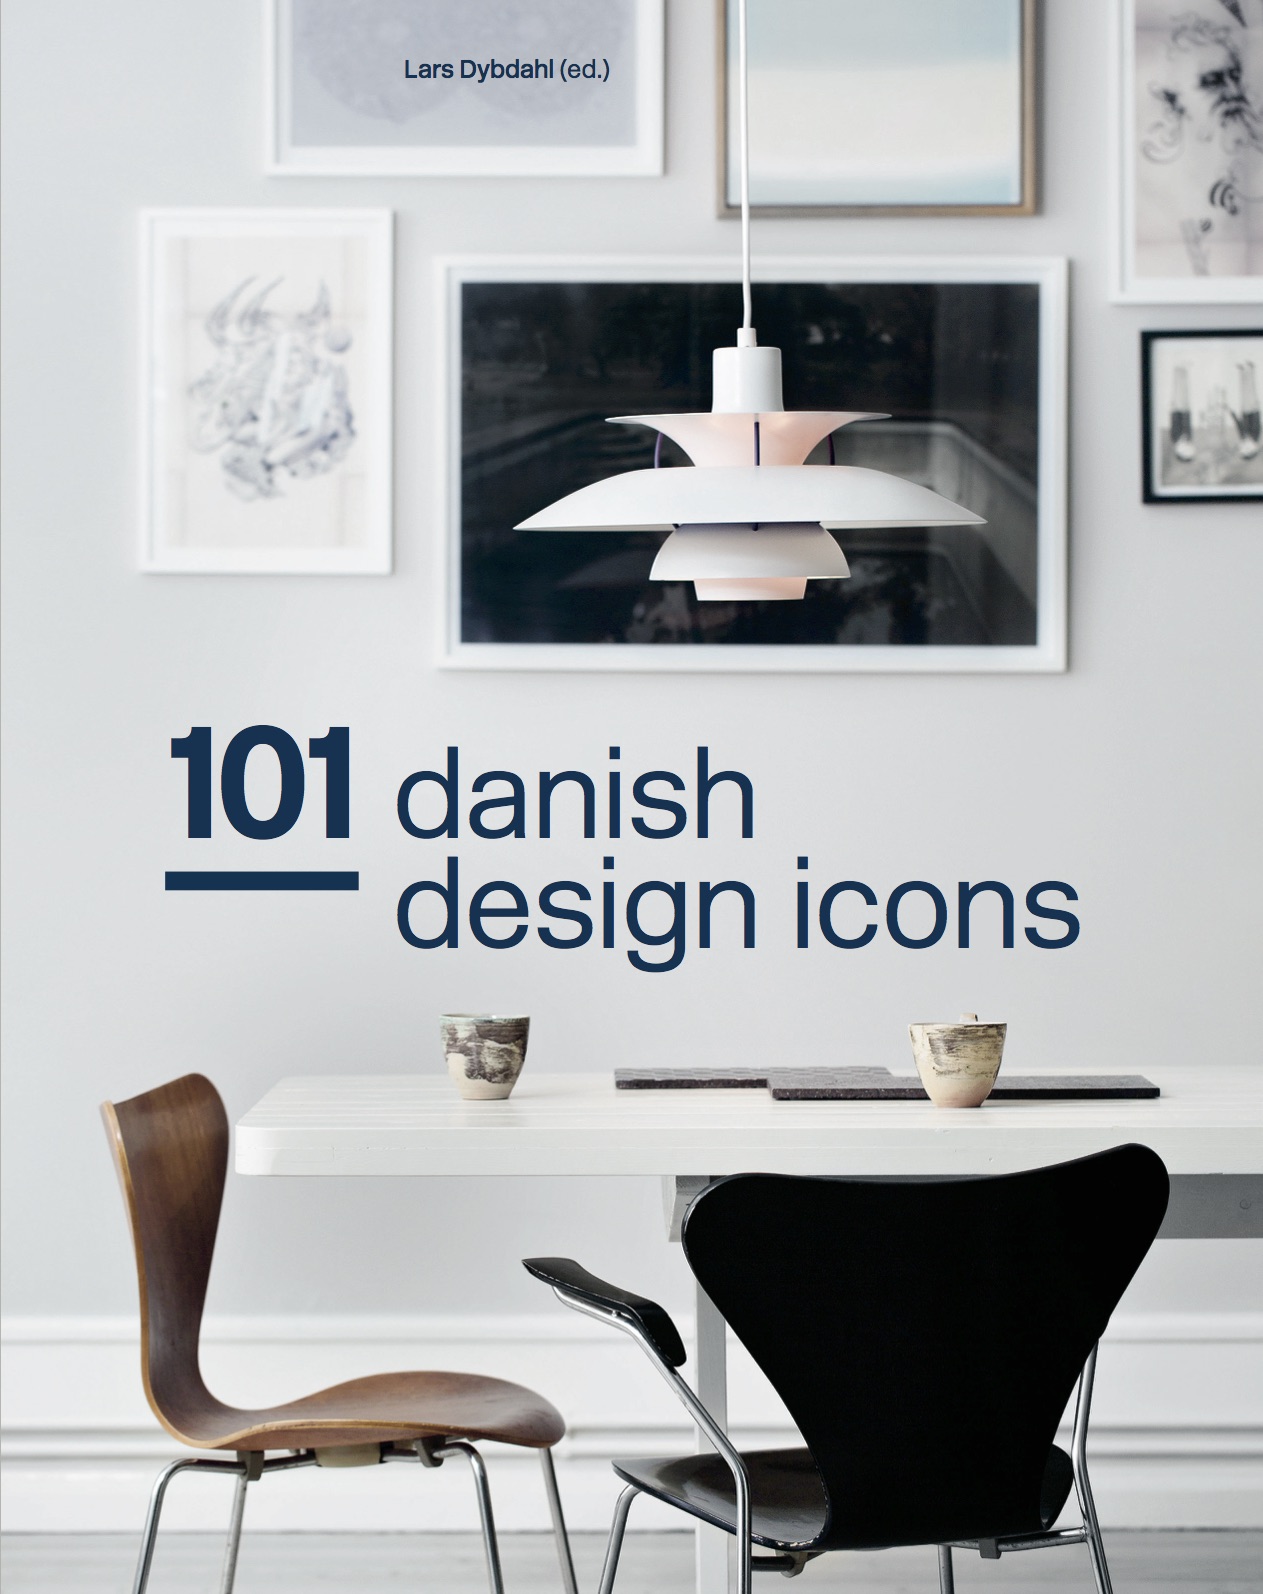 101 Danish design icons by Lars Dybdahl